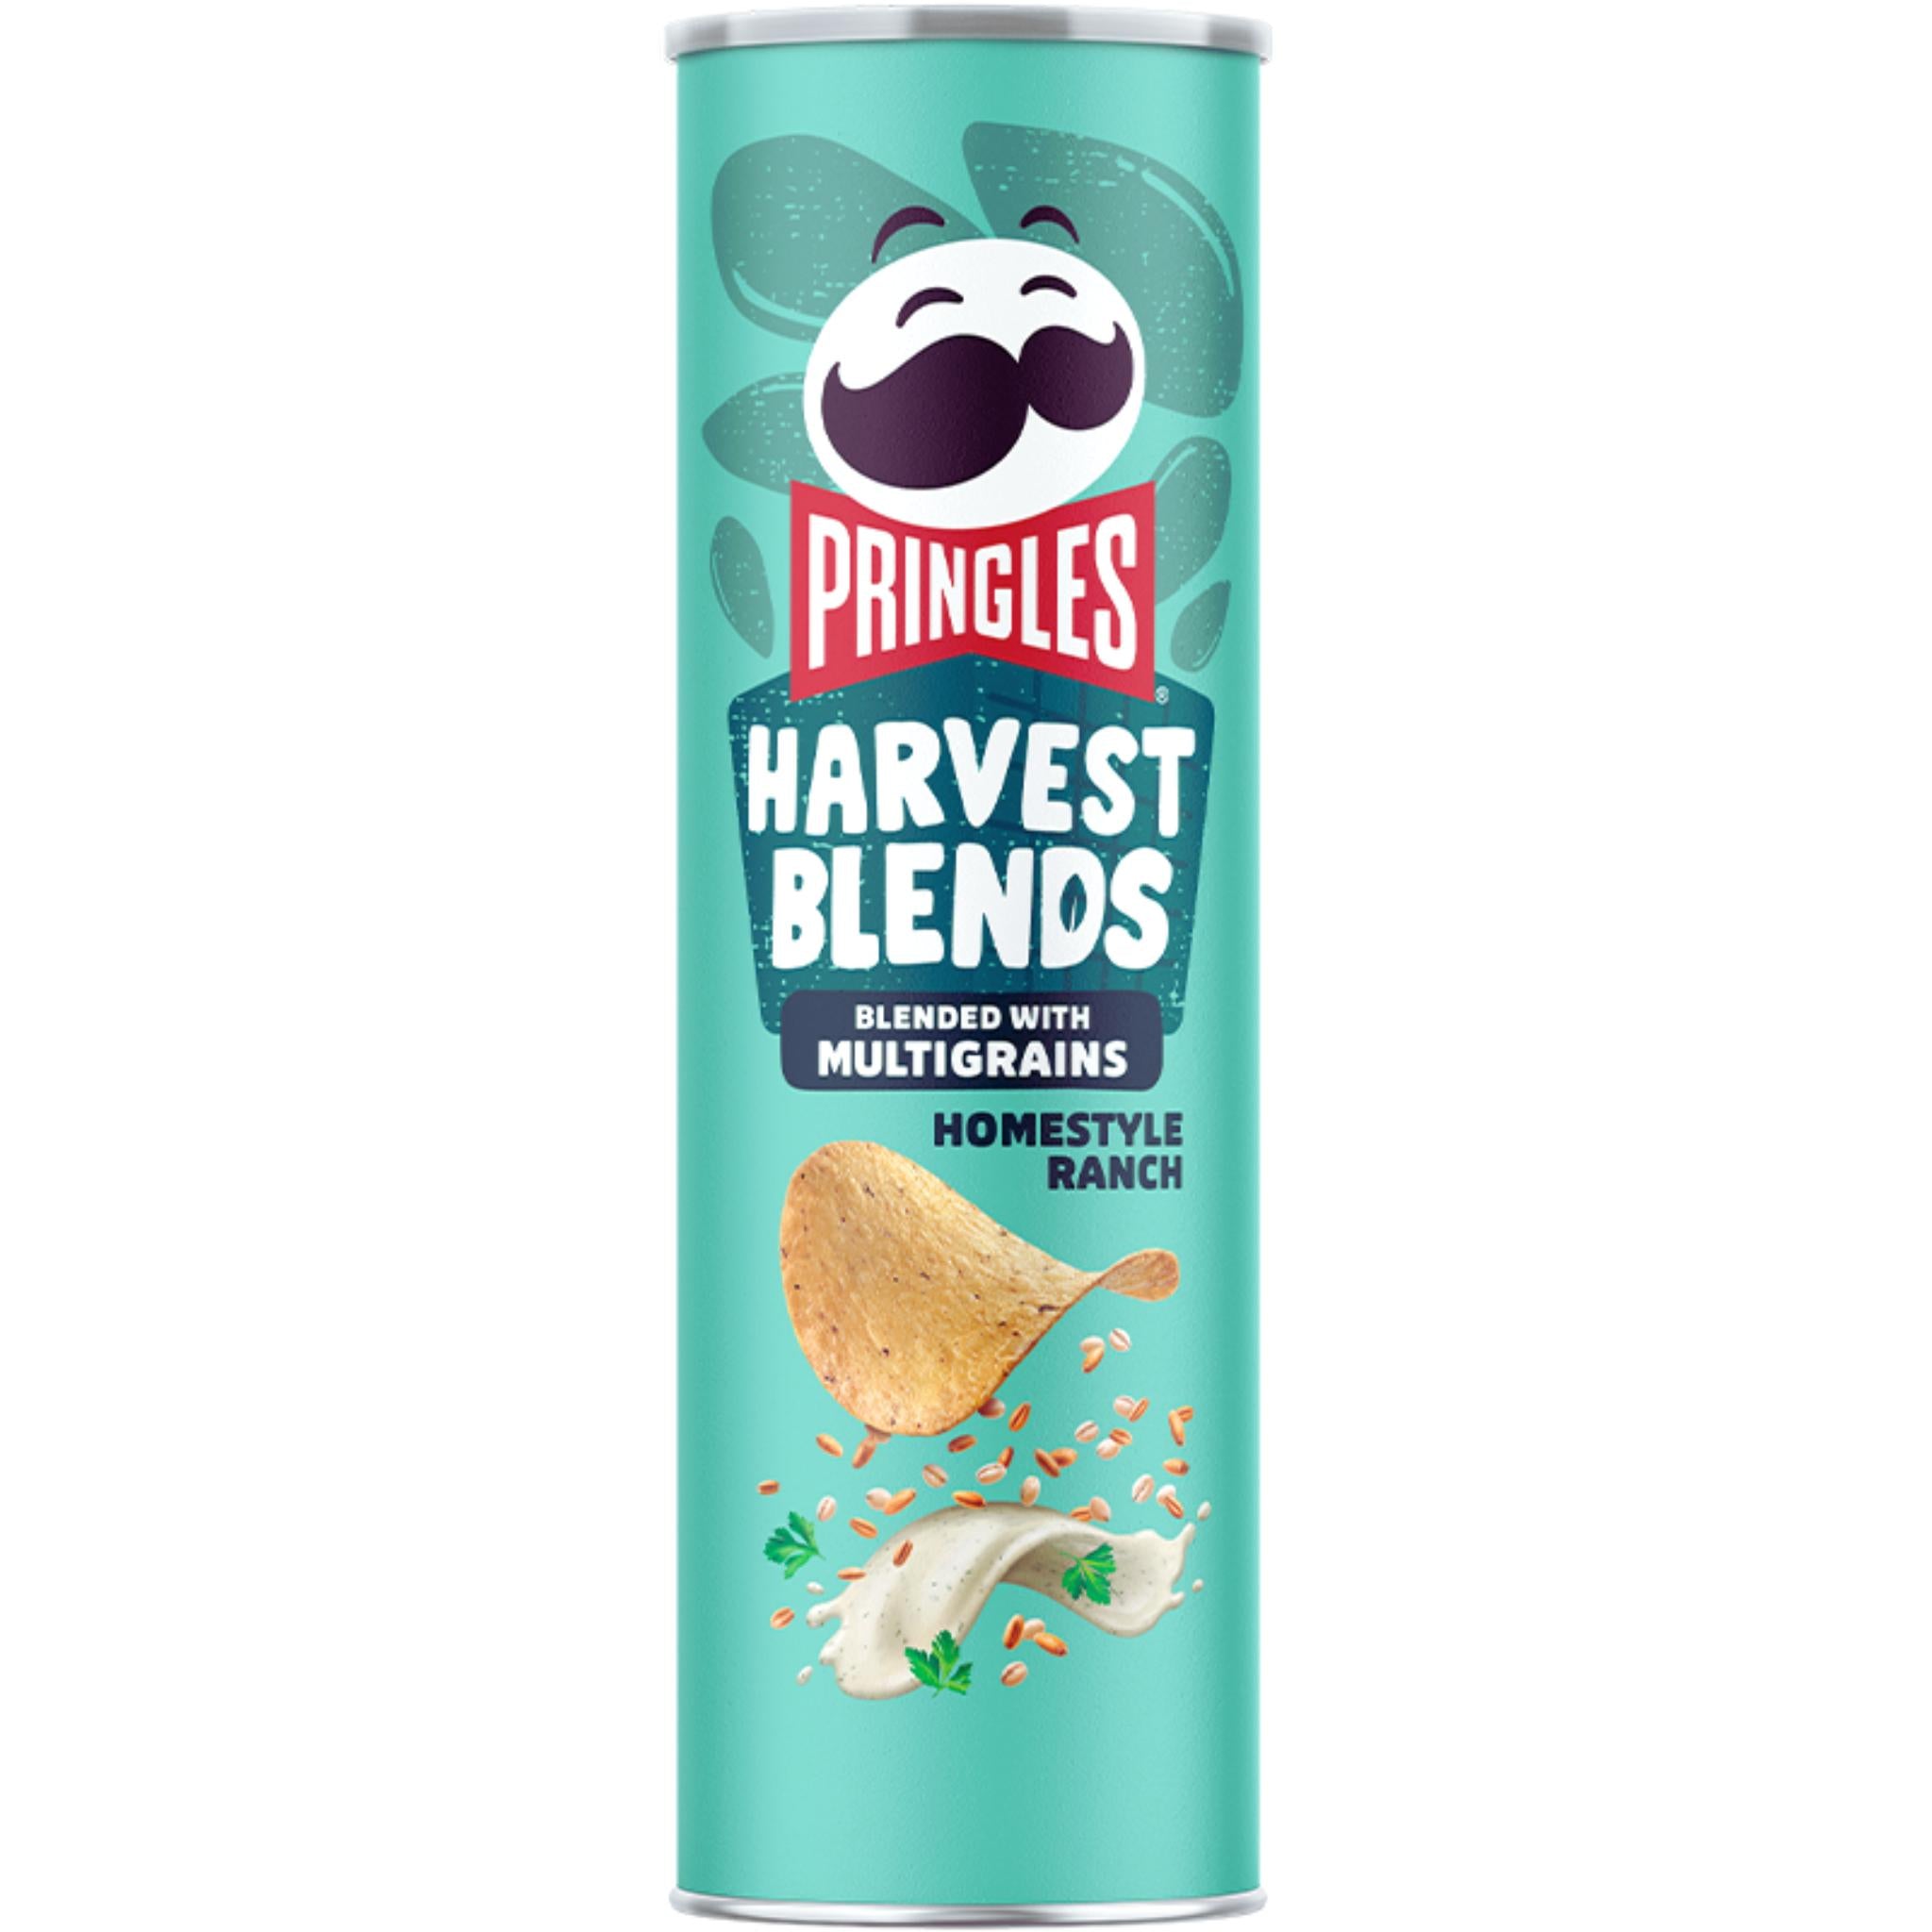 Pringles Harvest Blends Homestyle Ranch - 158g (USA)